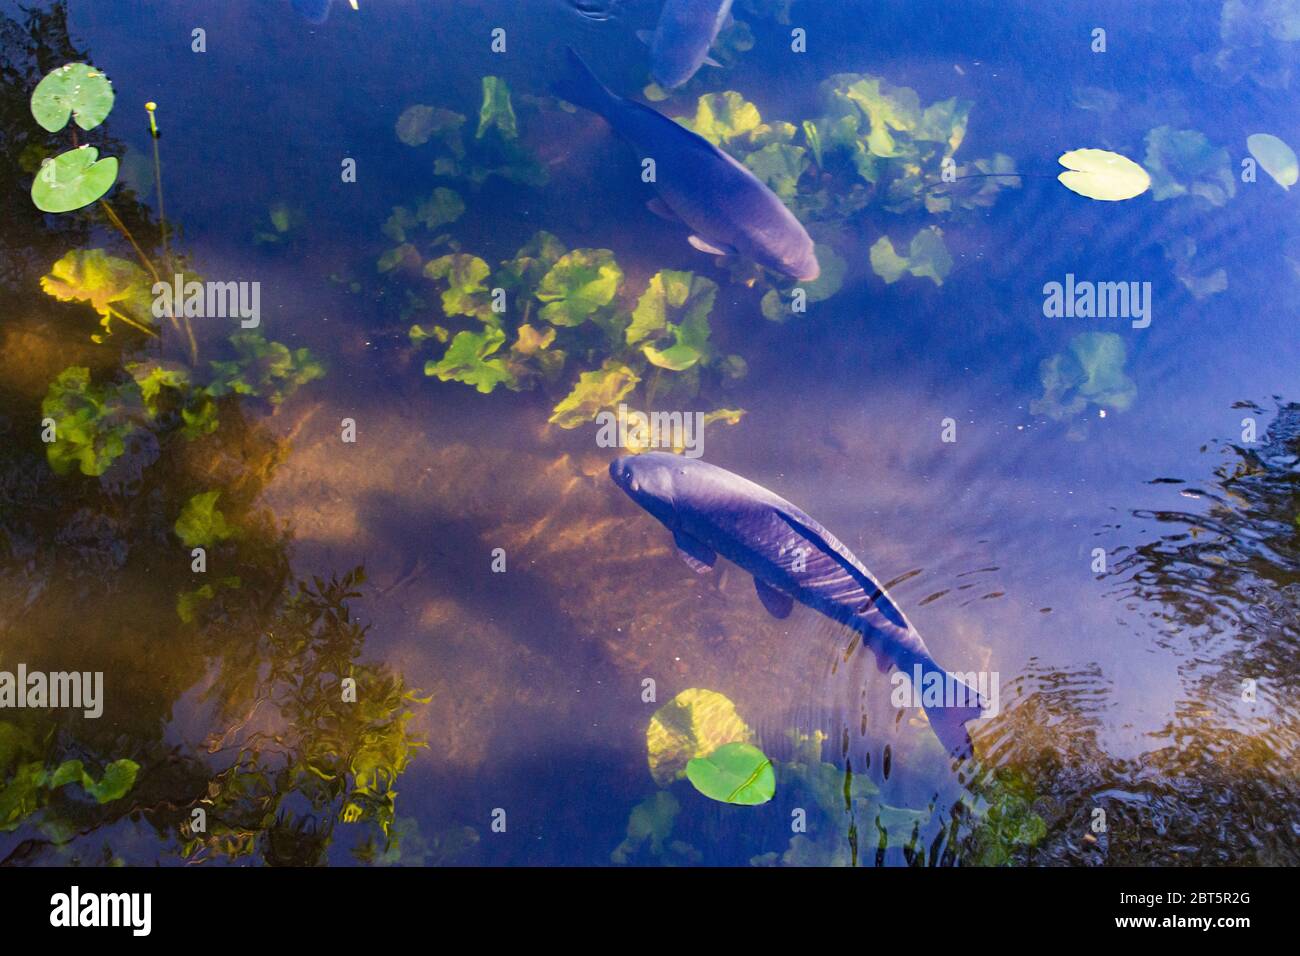 Wien, Vienna: common carp or European carp (Cyprinus carpio), in oxbow lake, in 22. Donaustadt, Wien, Austria Stock Photo